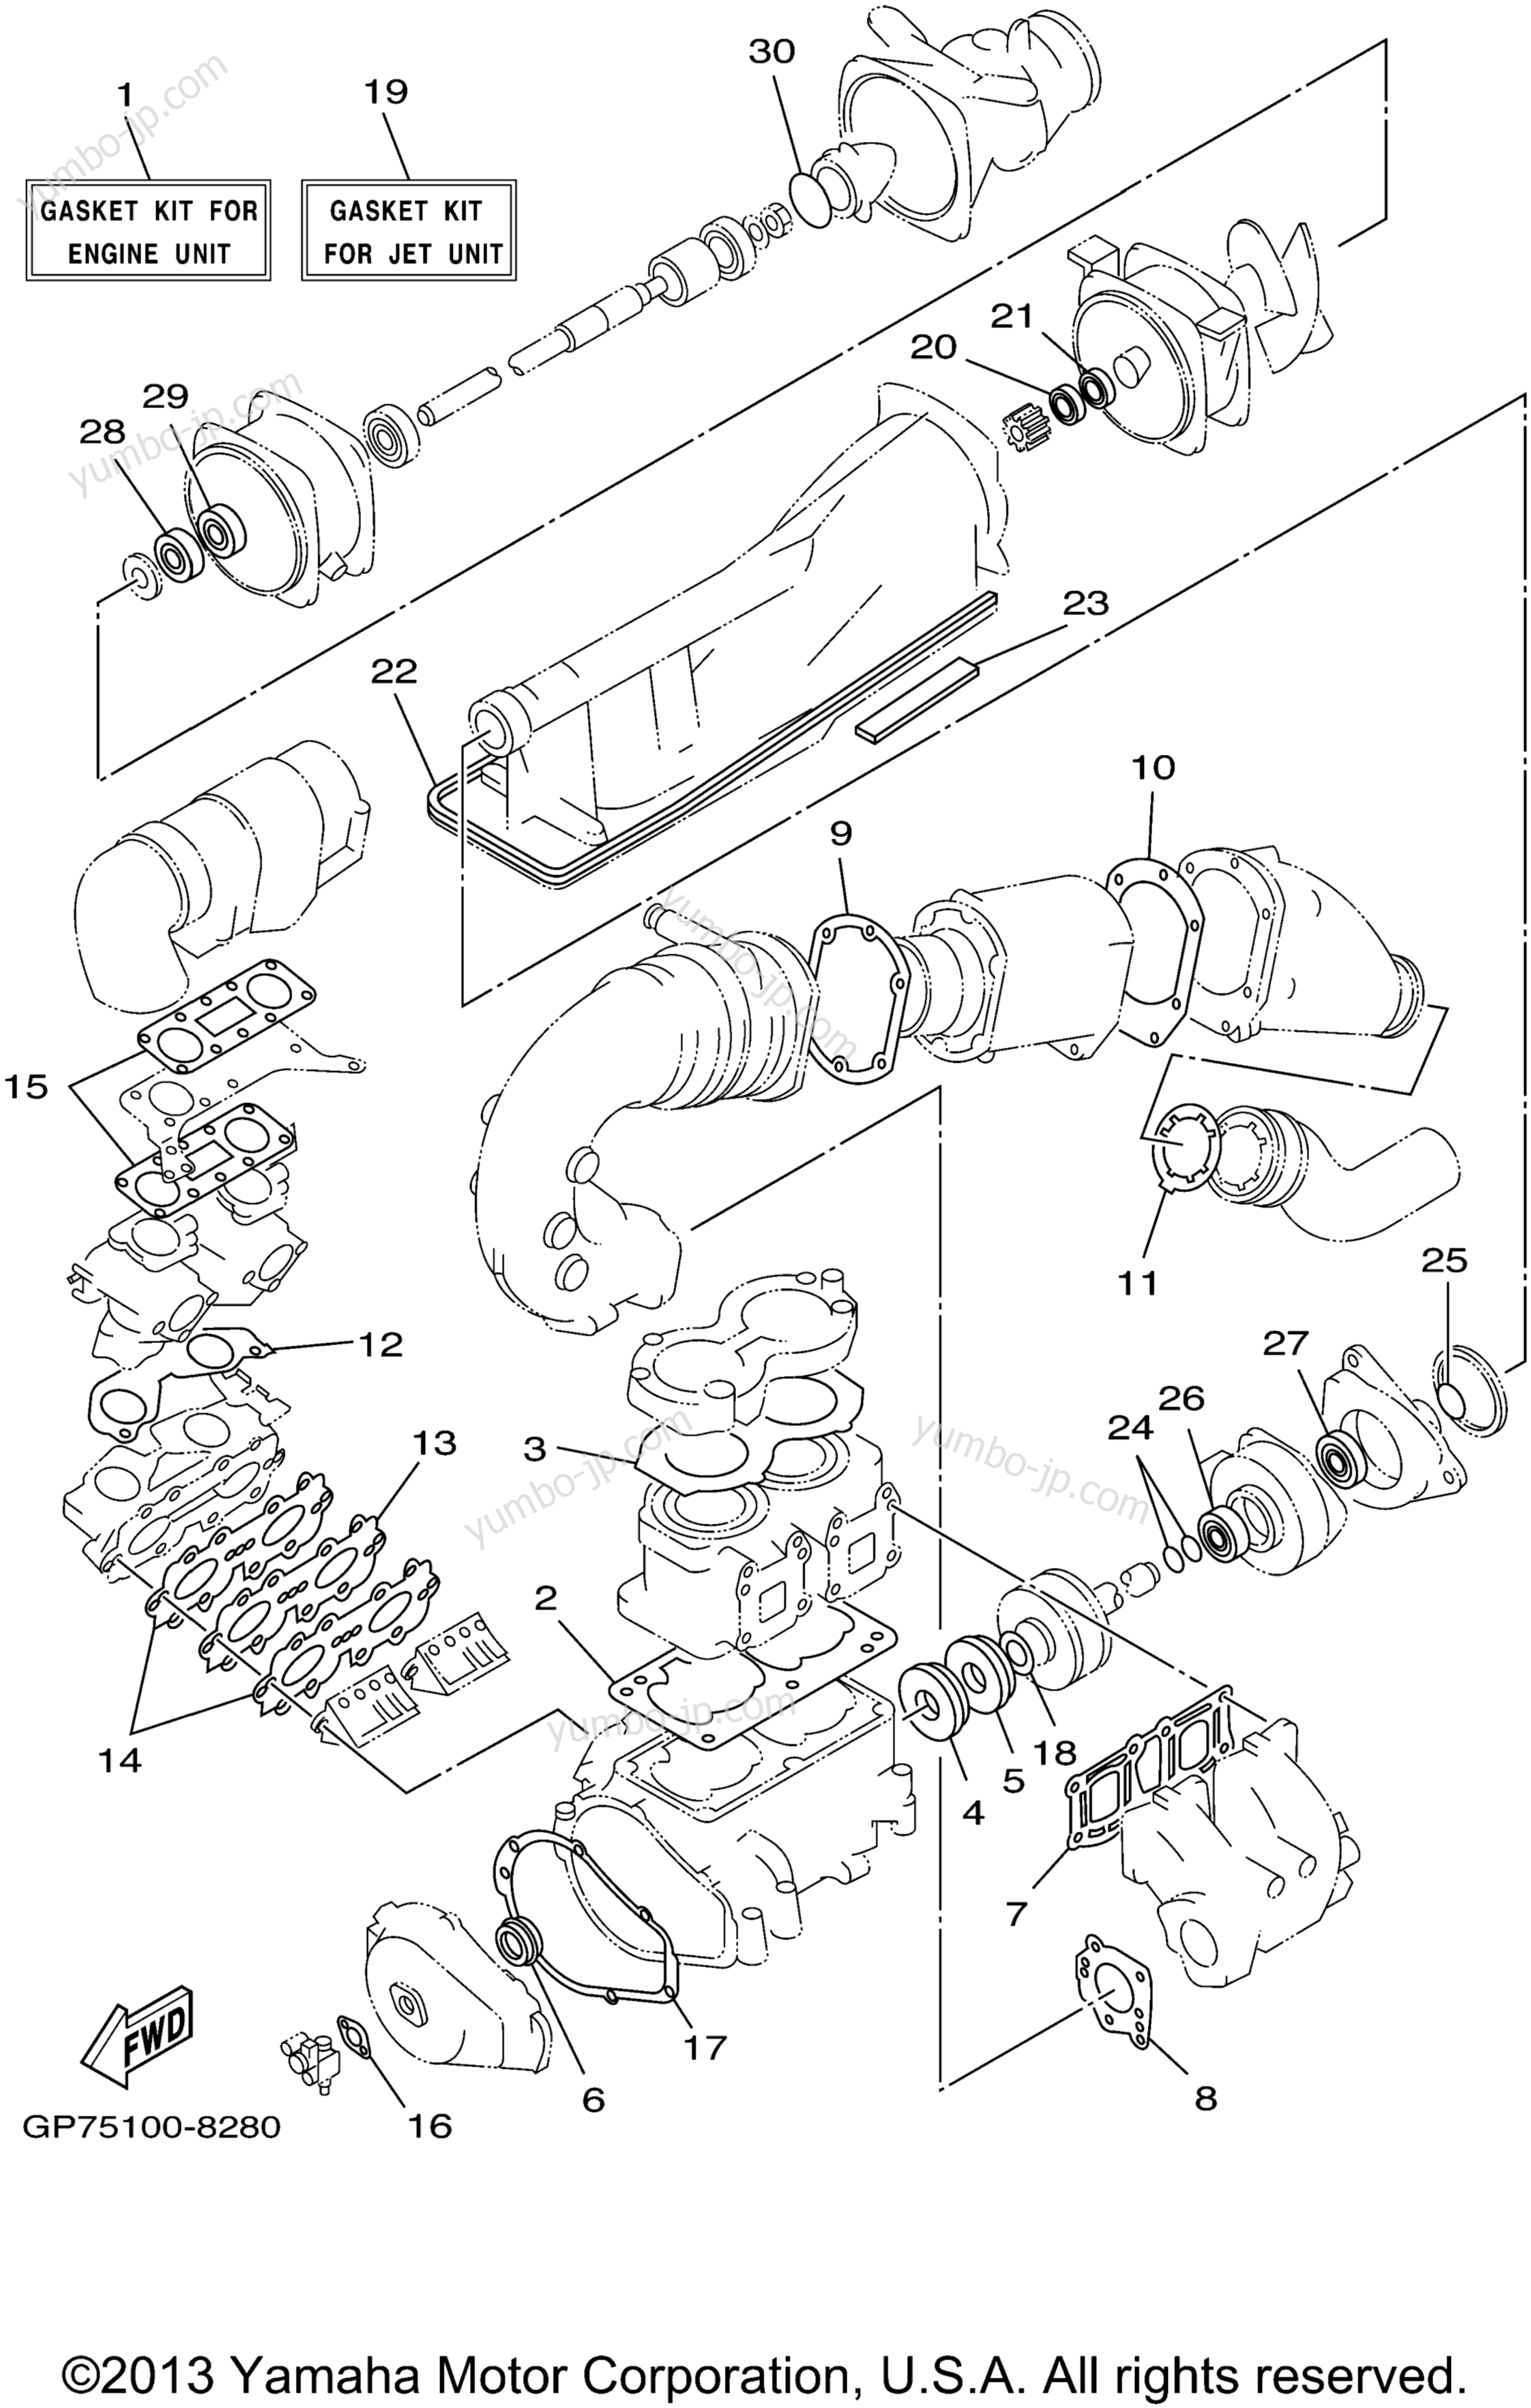 Repair Kit 1 для гидроциклов YAMAHA WAVE RUNNER GP760 (GP760W) 1998 г.